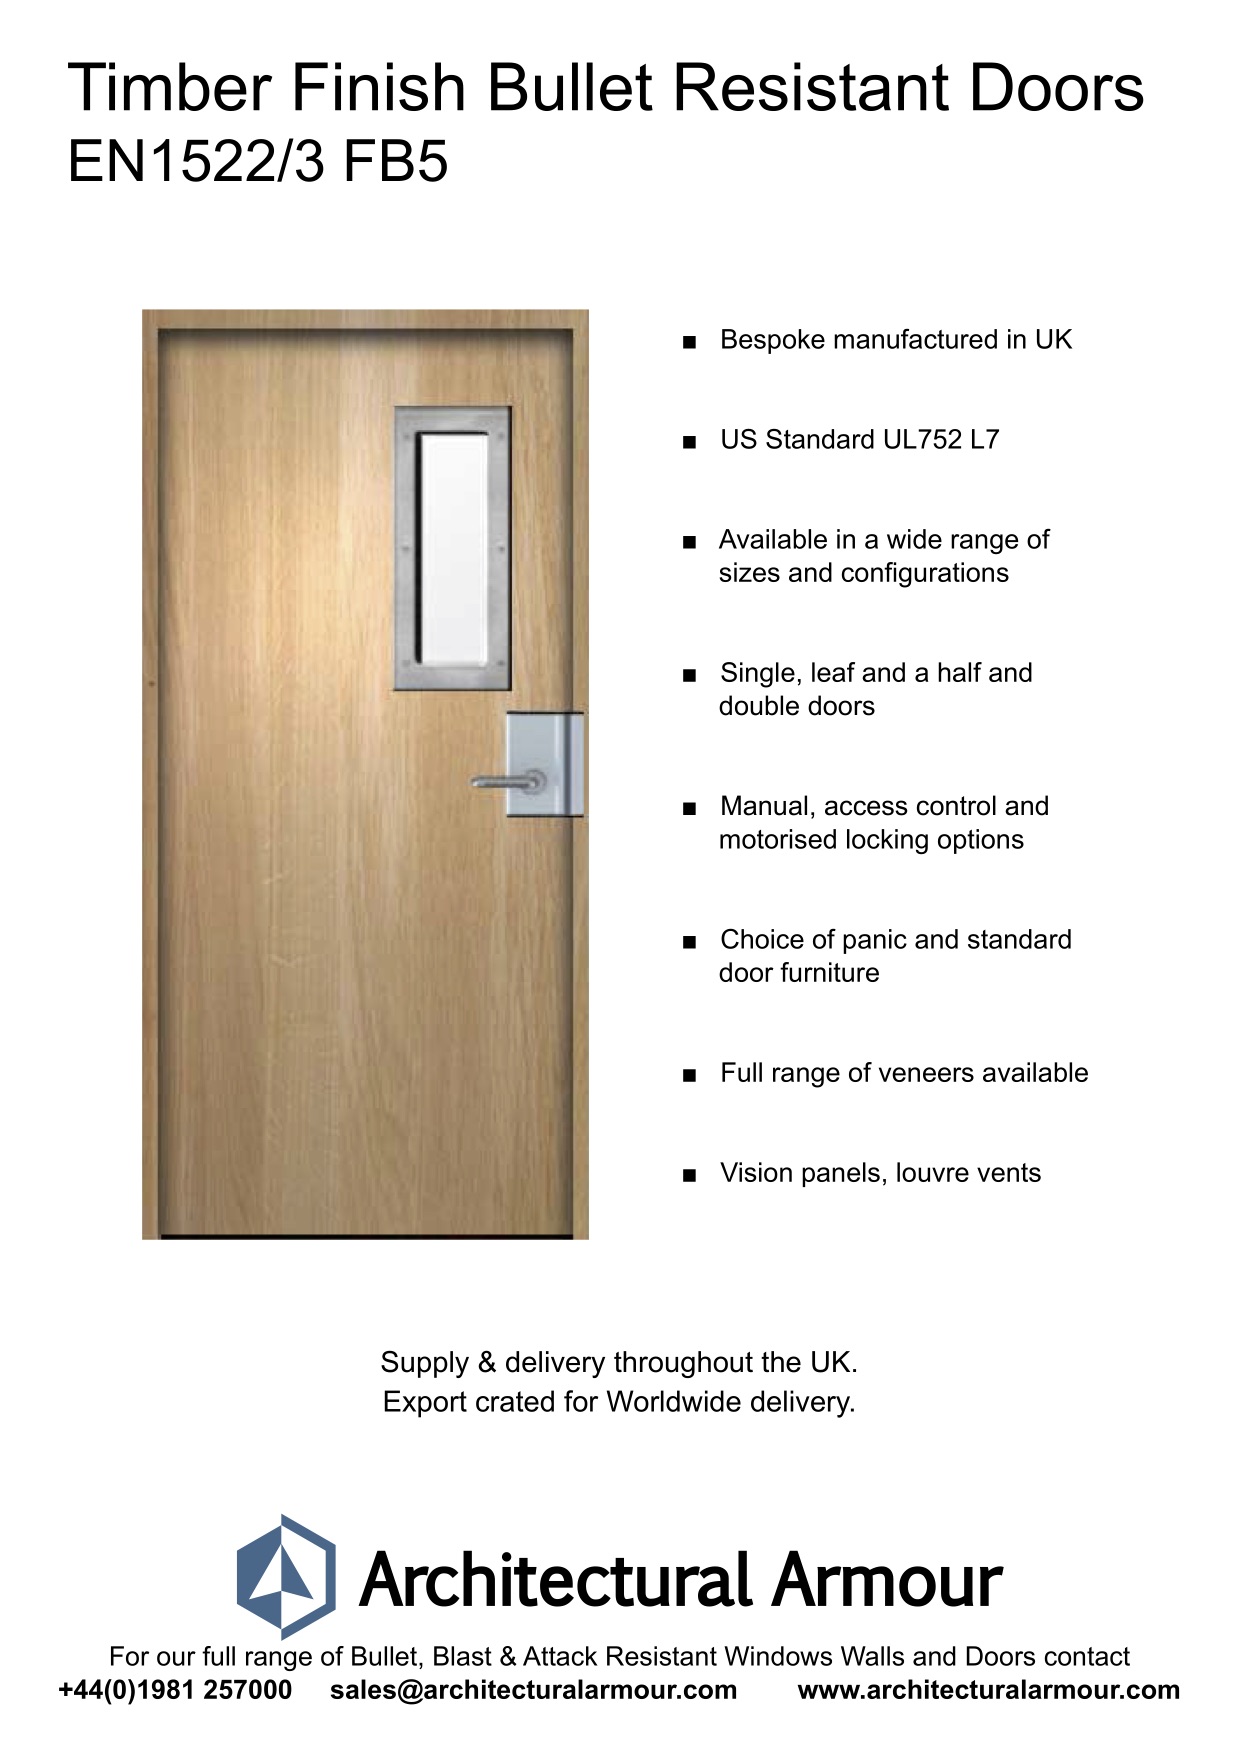 EN1522-3-FB5-Single-Slim-Vision-Panel-Bullet-Resistant-Timber-Finish-Door